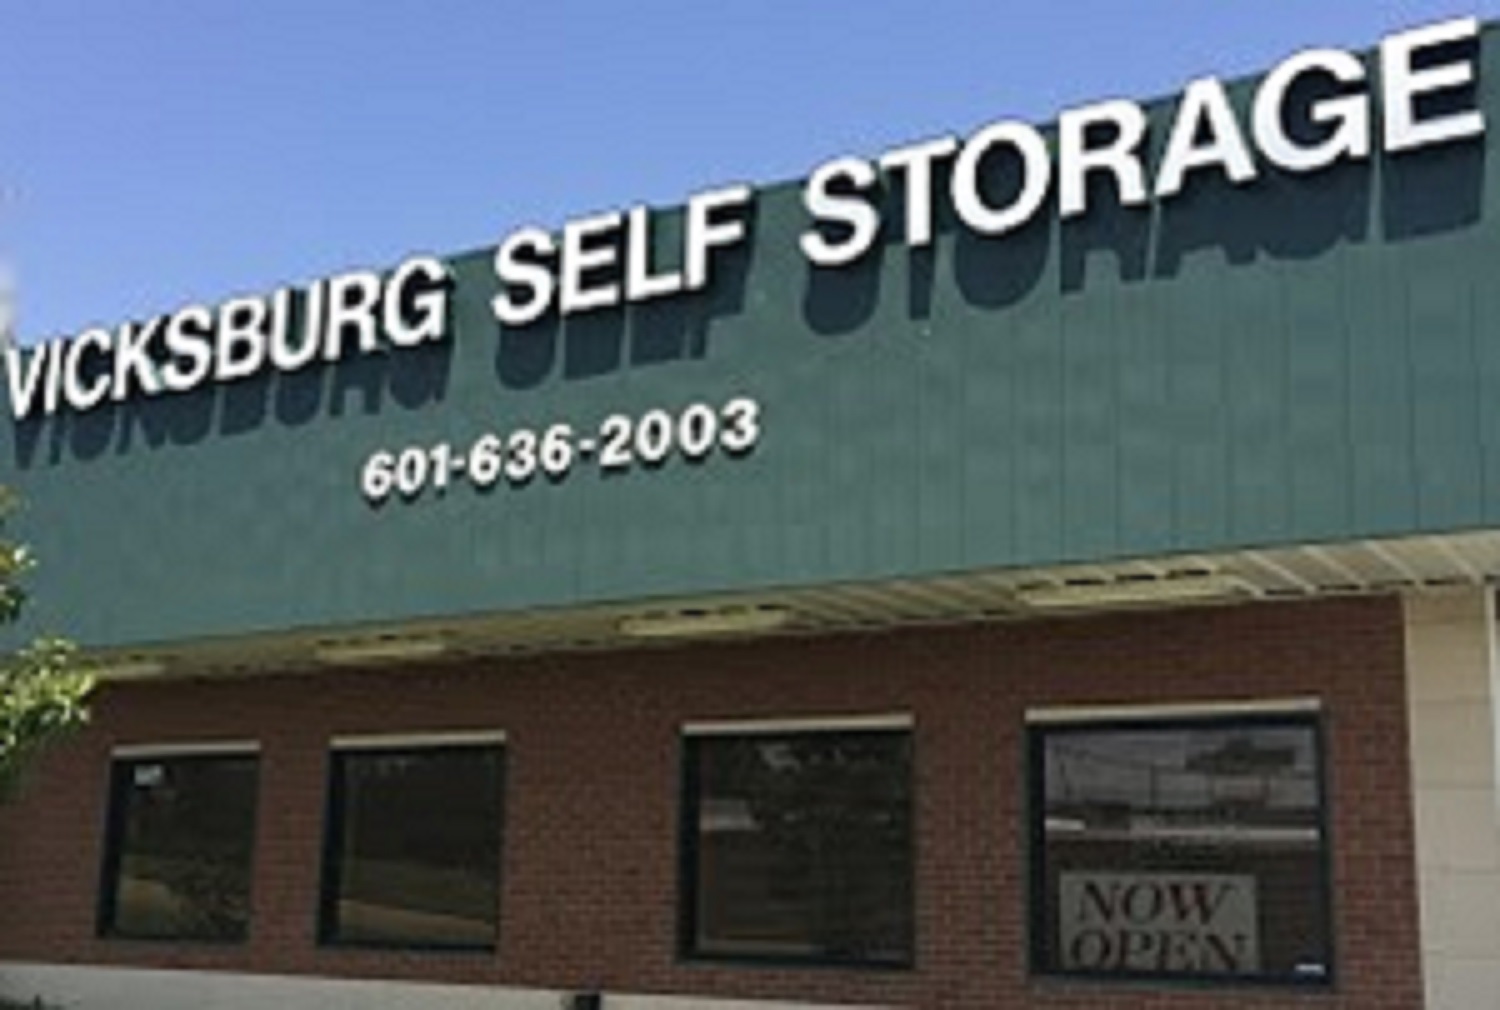 Vicksburg Self Storage